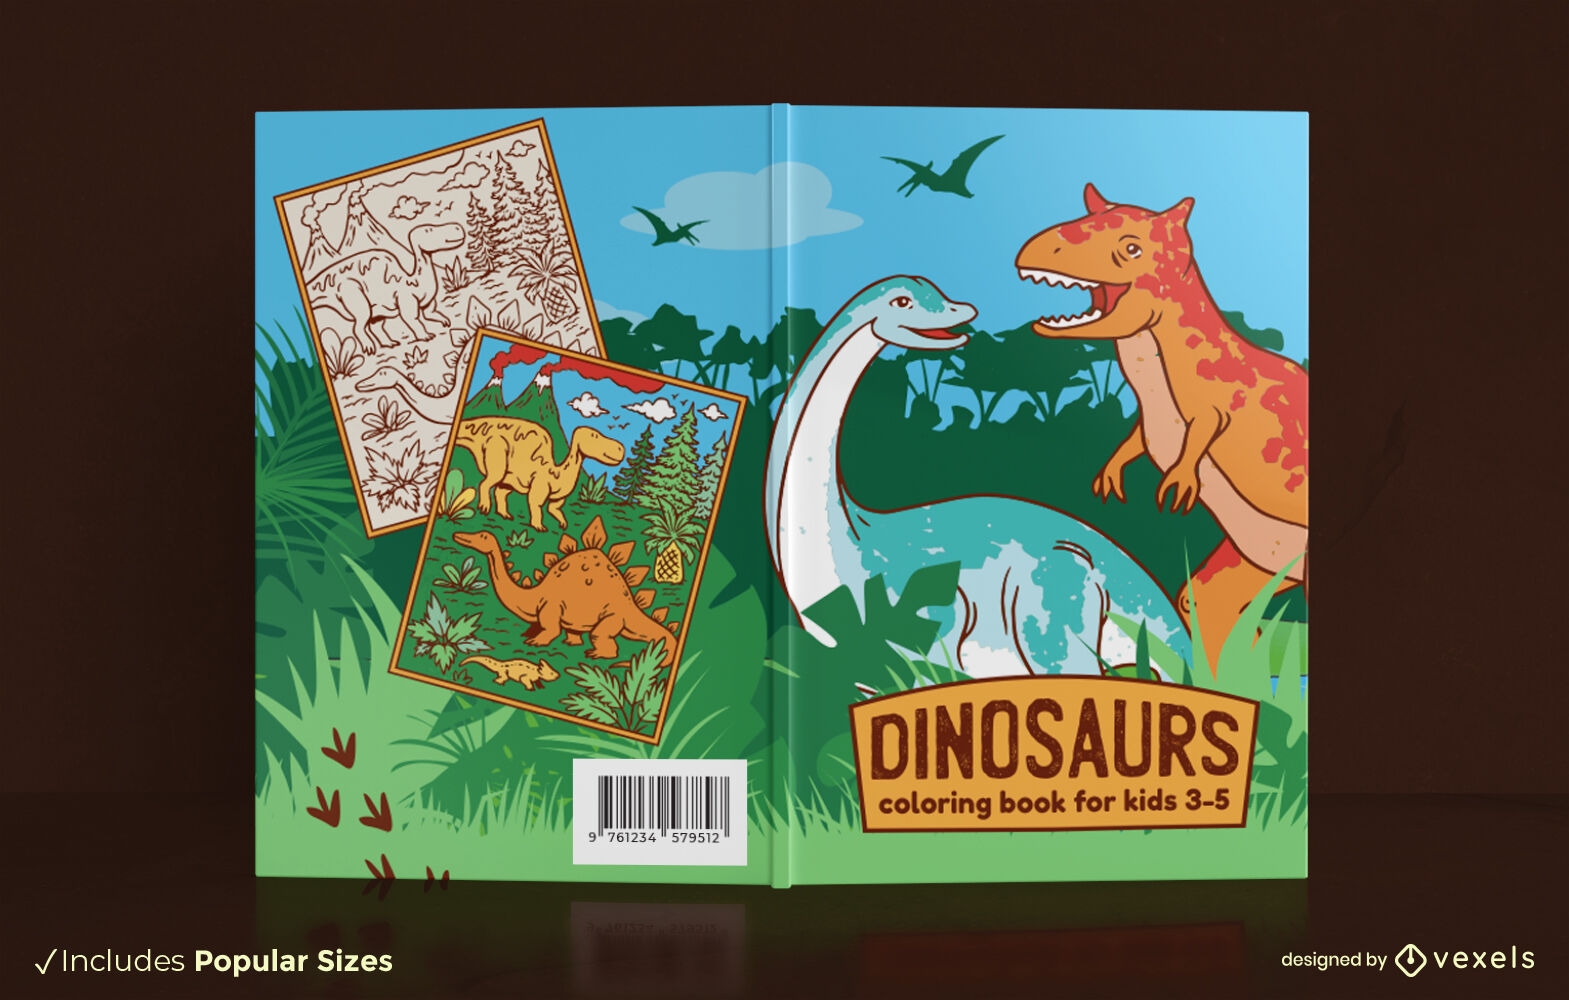 Descarga Vector De Portada Del Libro Para Colorear Dinosaurios Para Niños